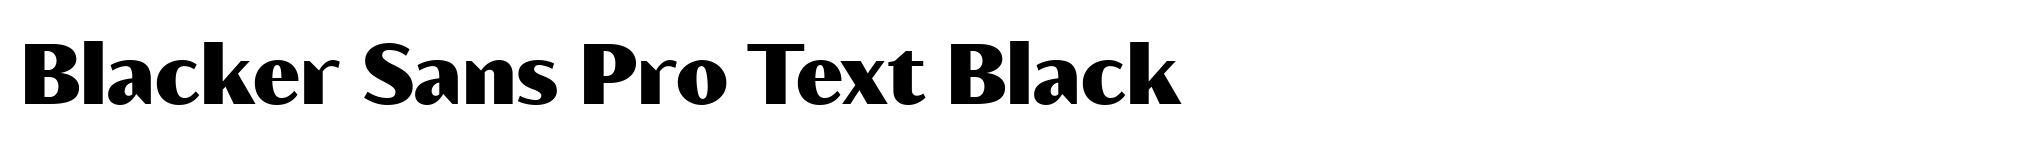 Blacker Sans Pro Text Black image